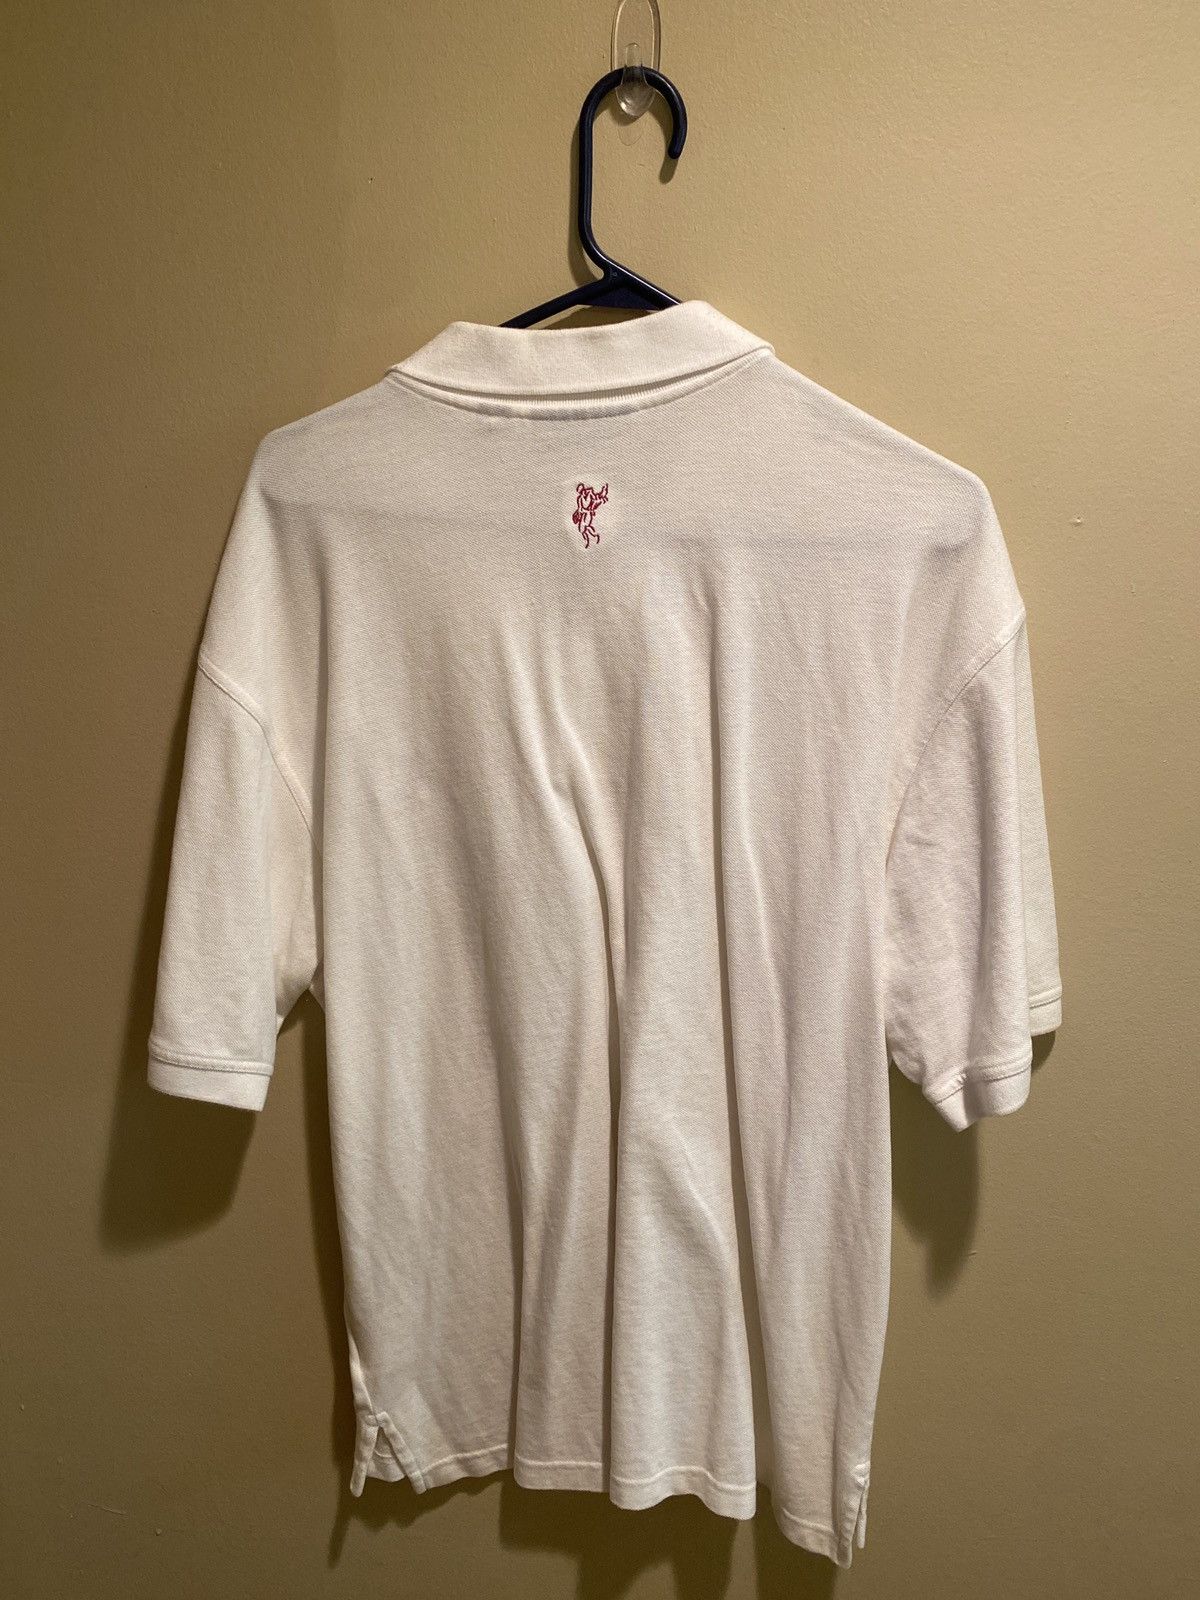 Ashworth Alabama Vintage Collared Shirt Size US XL / EU 56 / 4 - 2 Preview